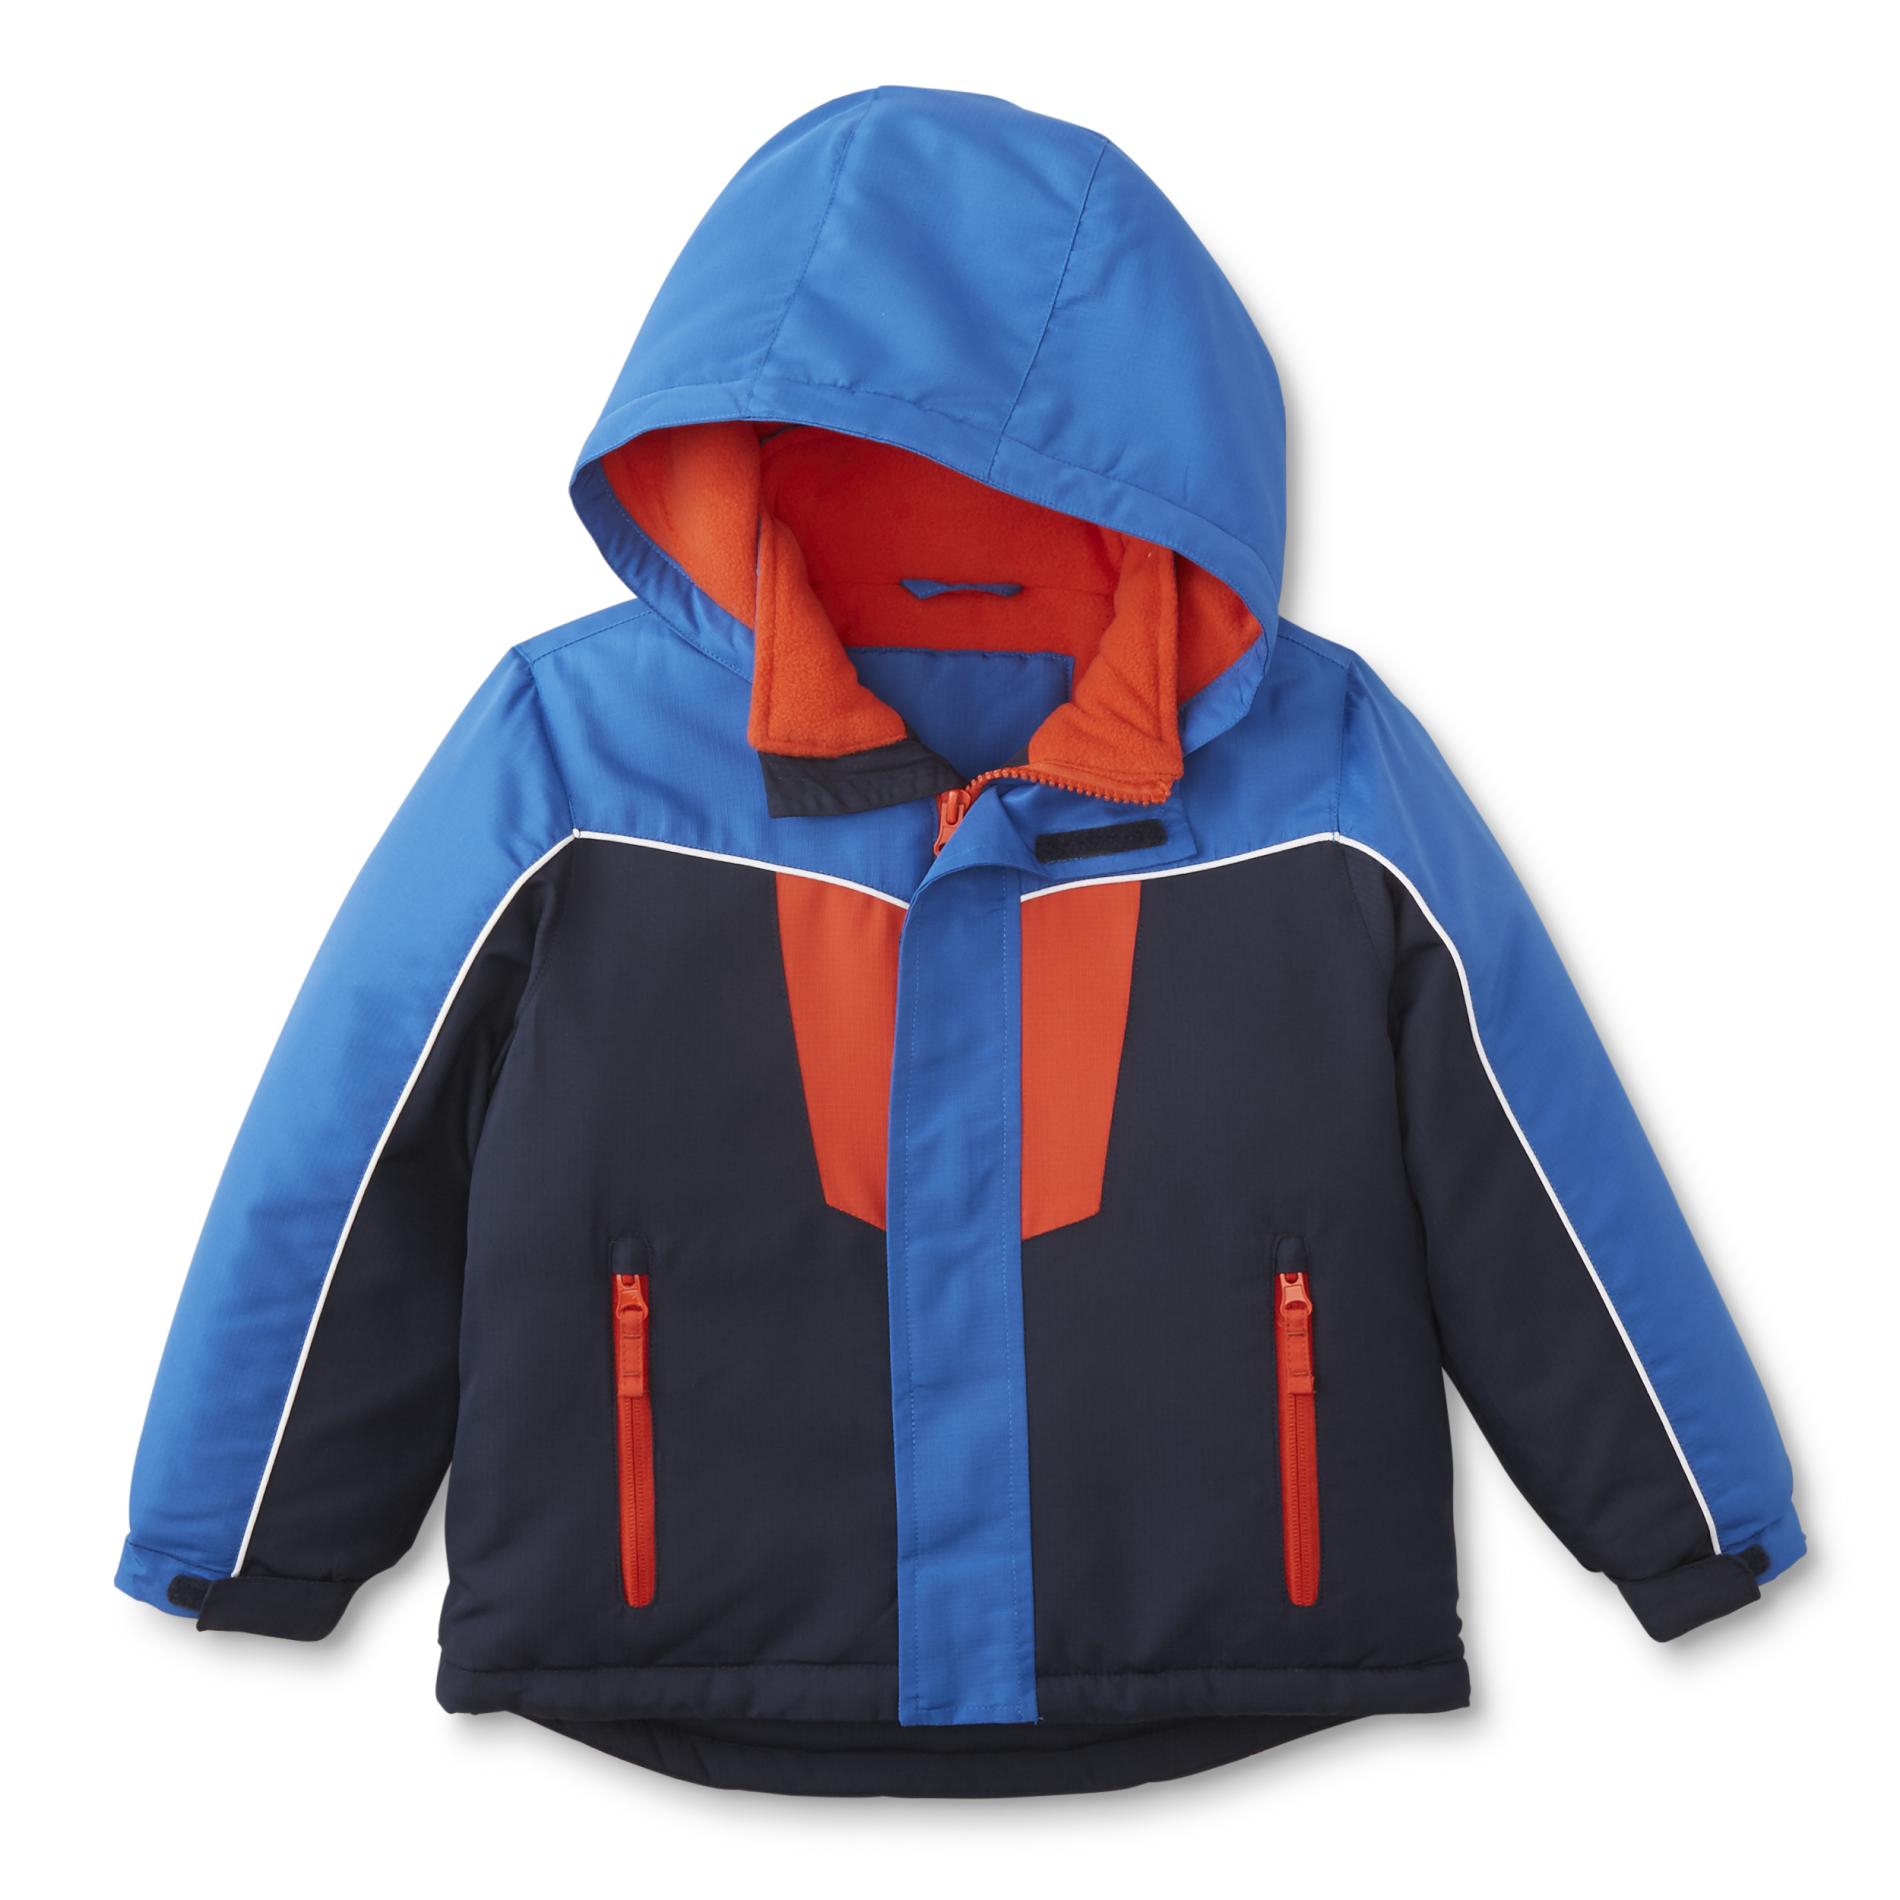 Toughskins Toddler Boy's Winter Jacket - Colorblock